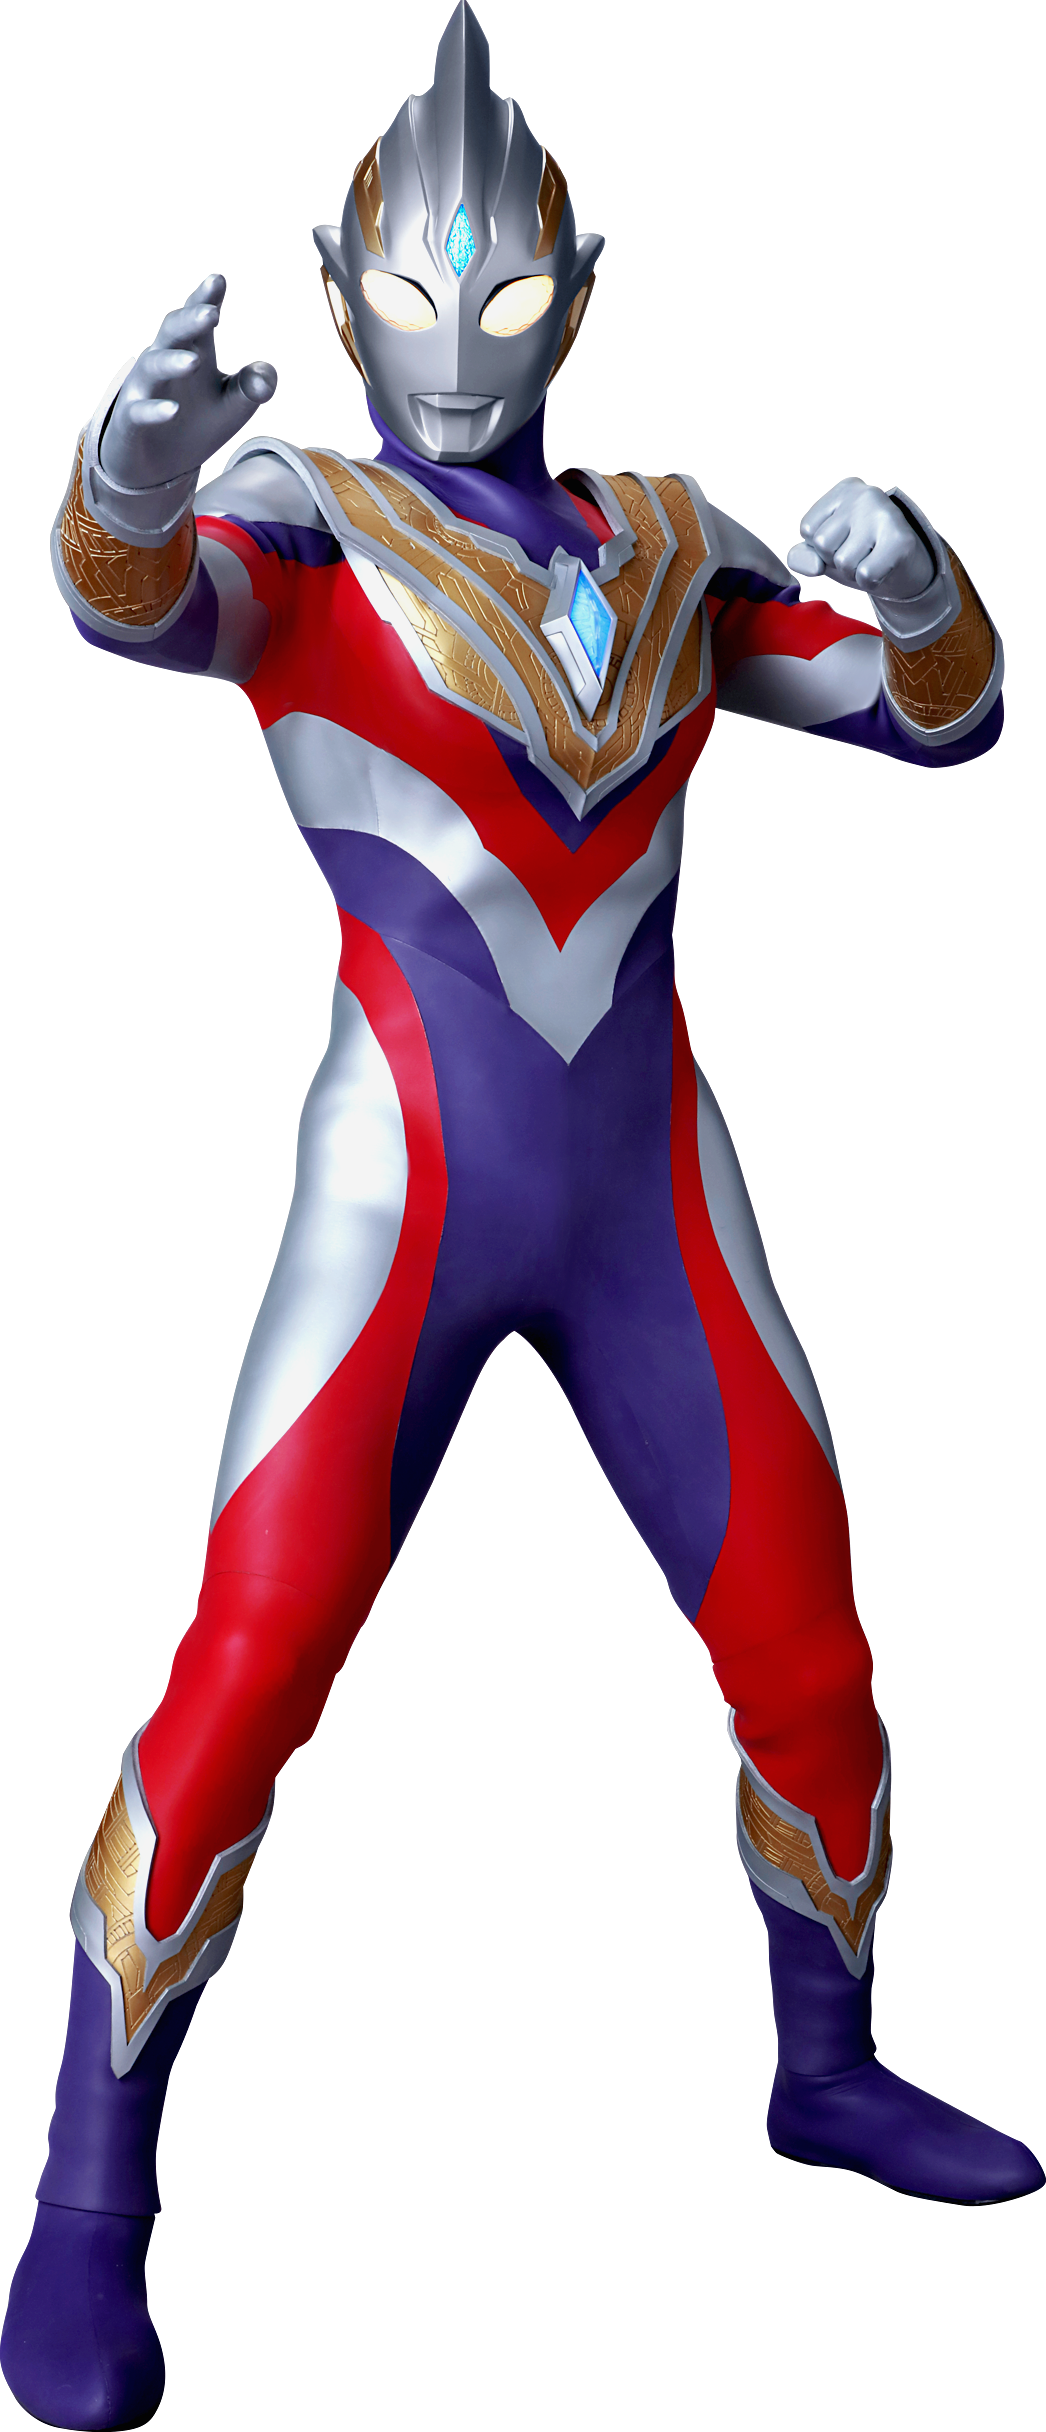 Trigger ultraman evil Ultraman Trigger: